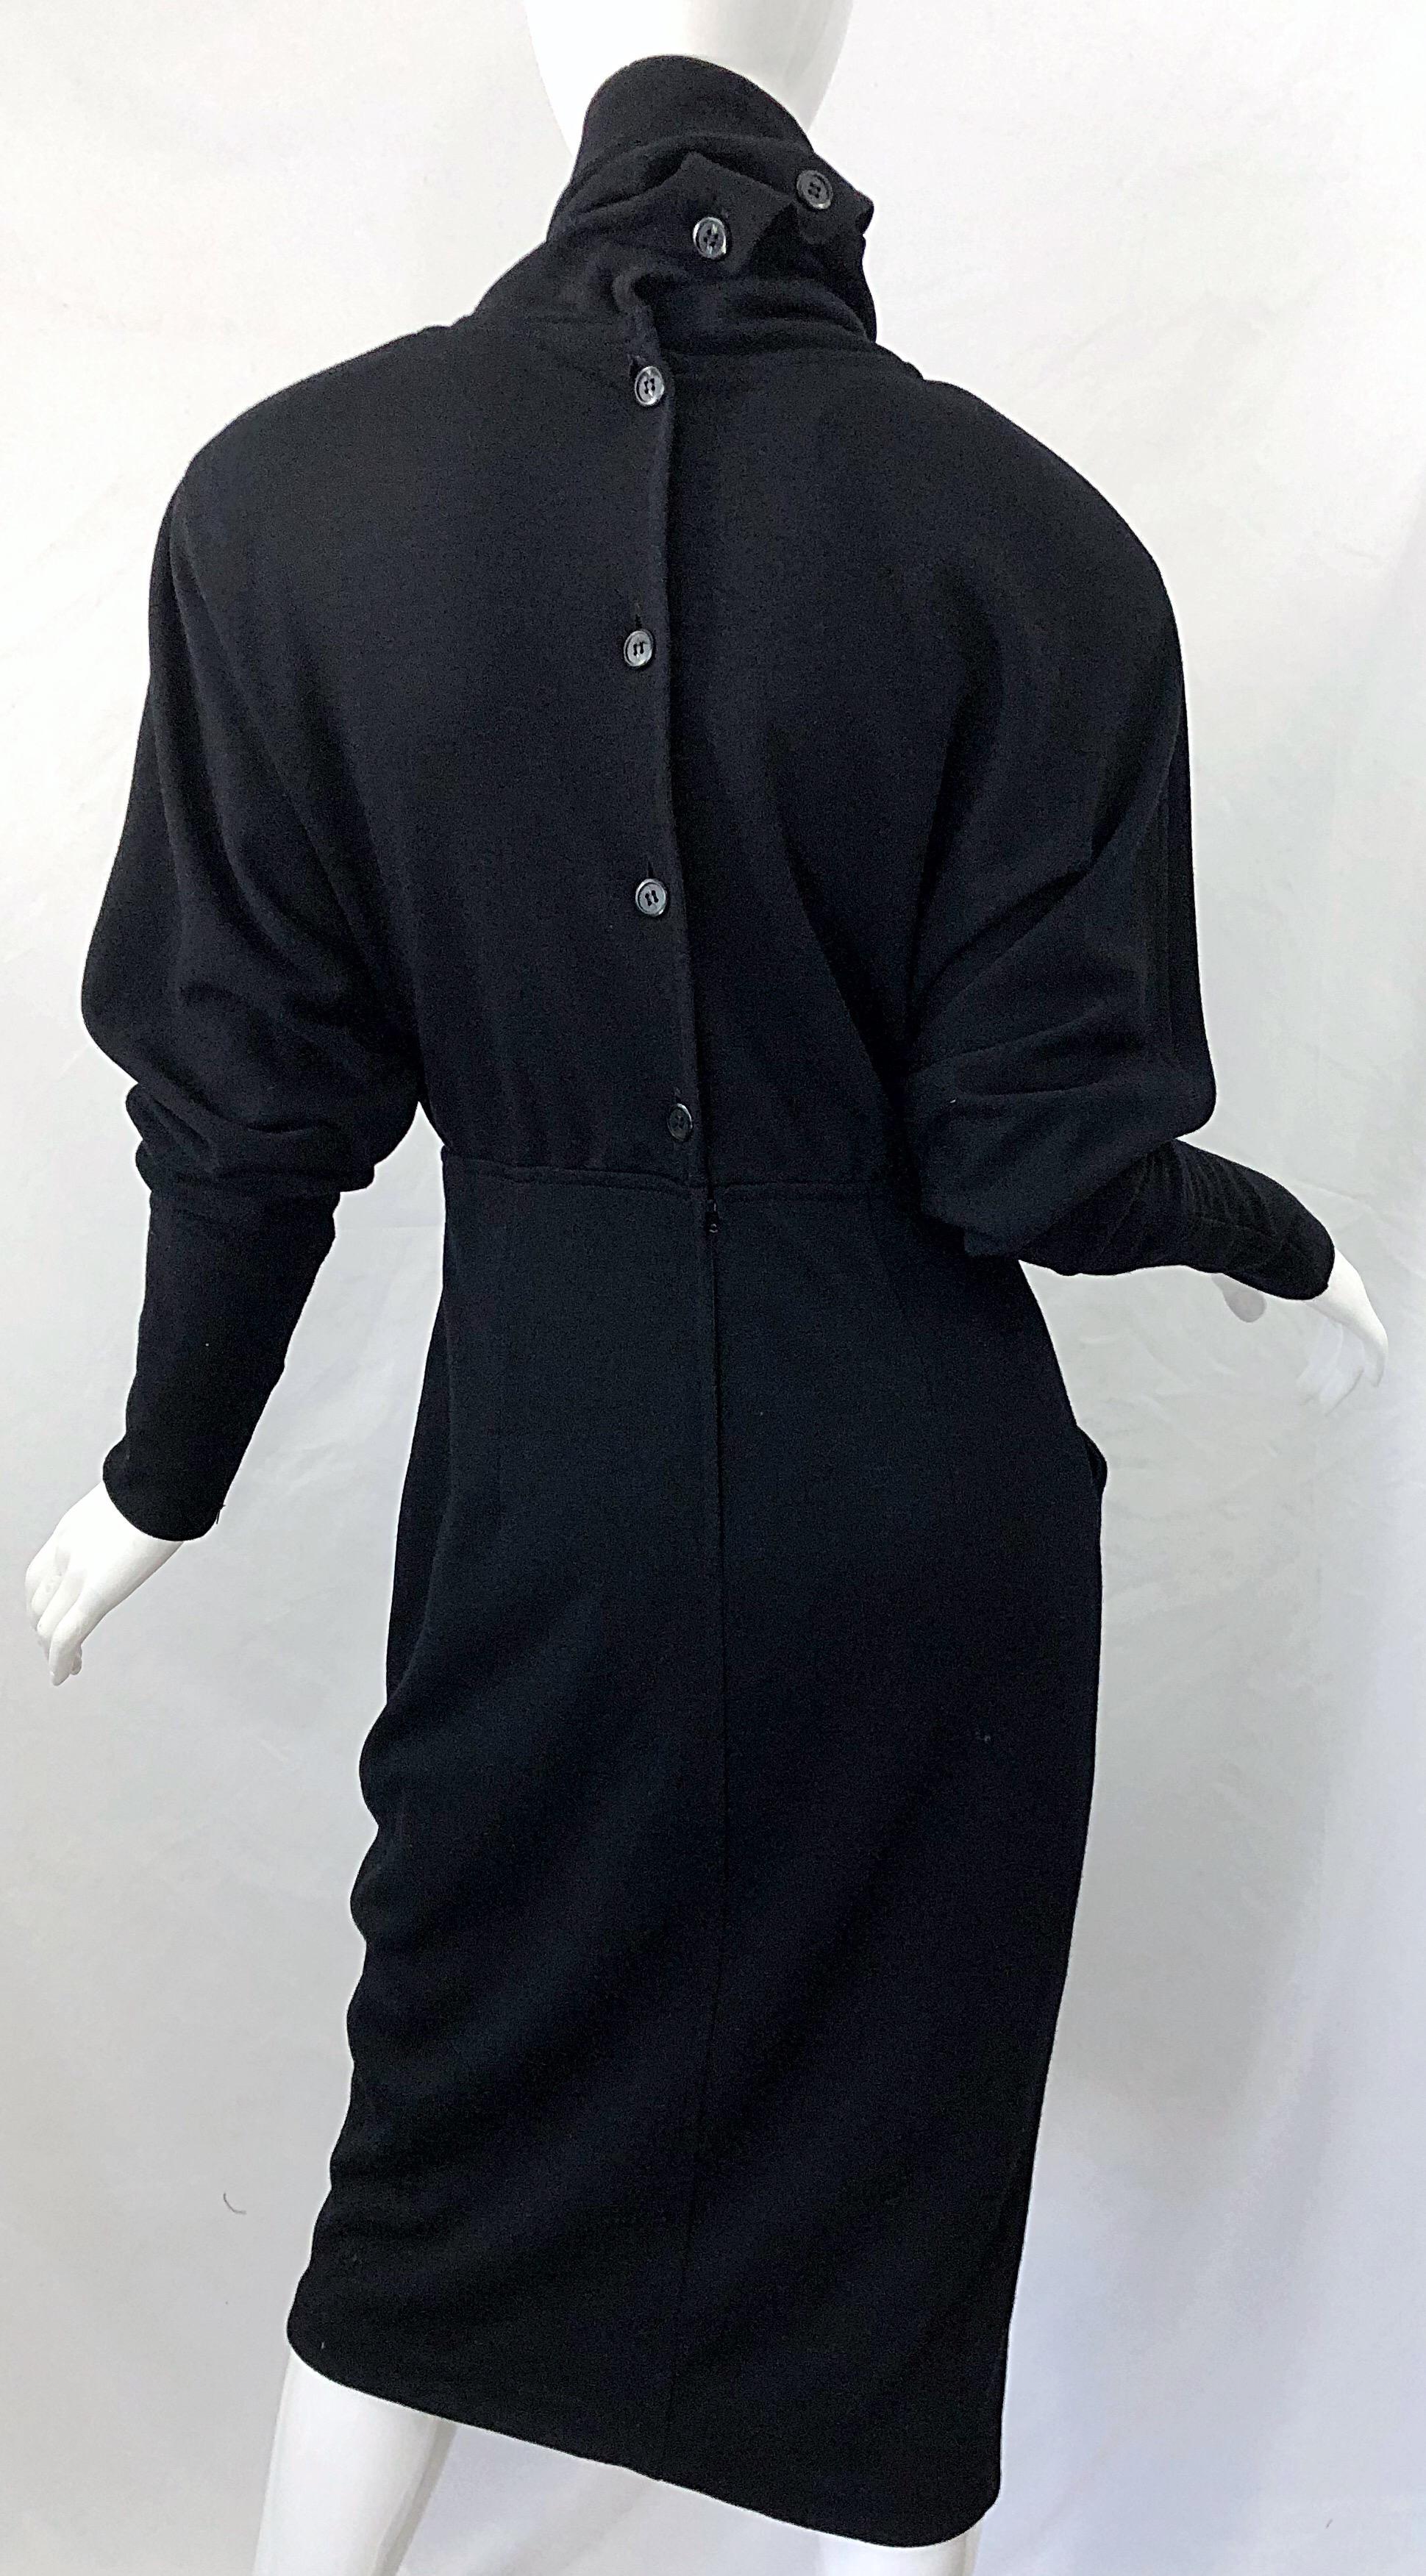 Gucci 1980s Avant Garde Black Size 42 Wool Vintage 80s Turtleneck Sweater Dress For Sale 2